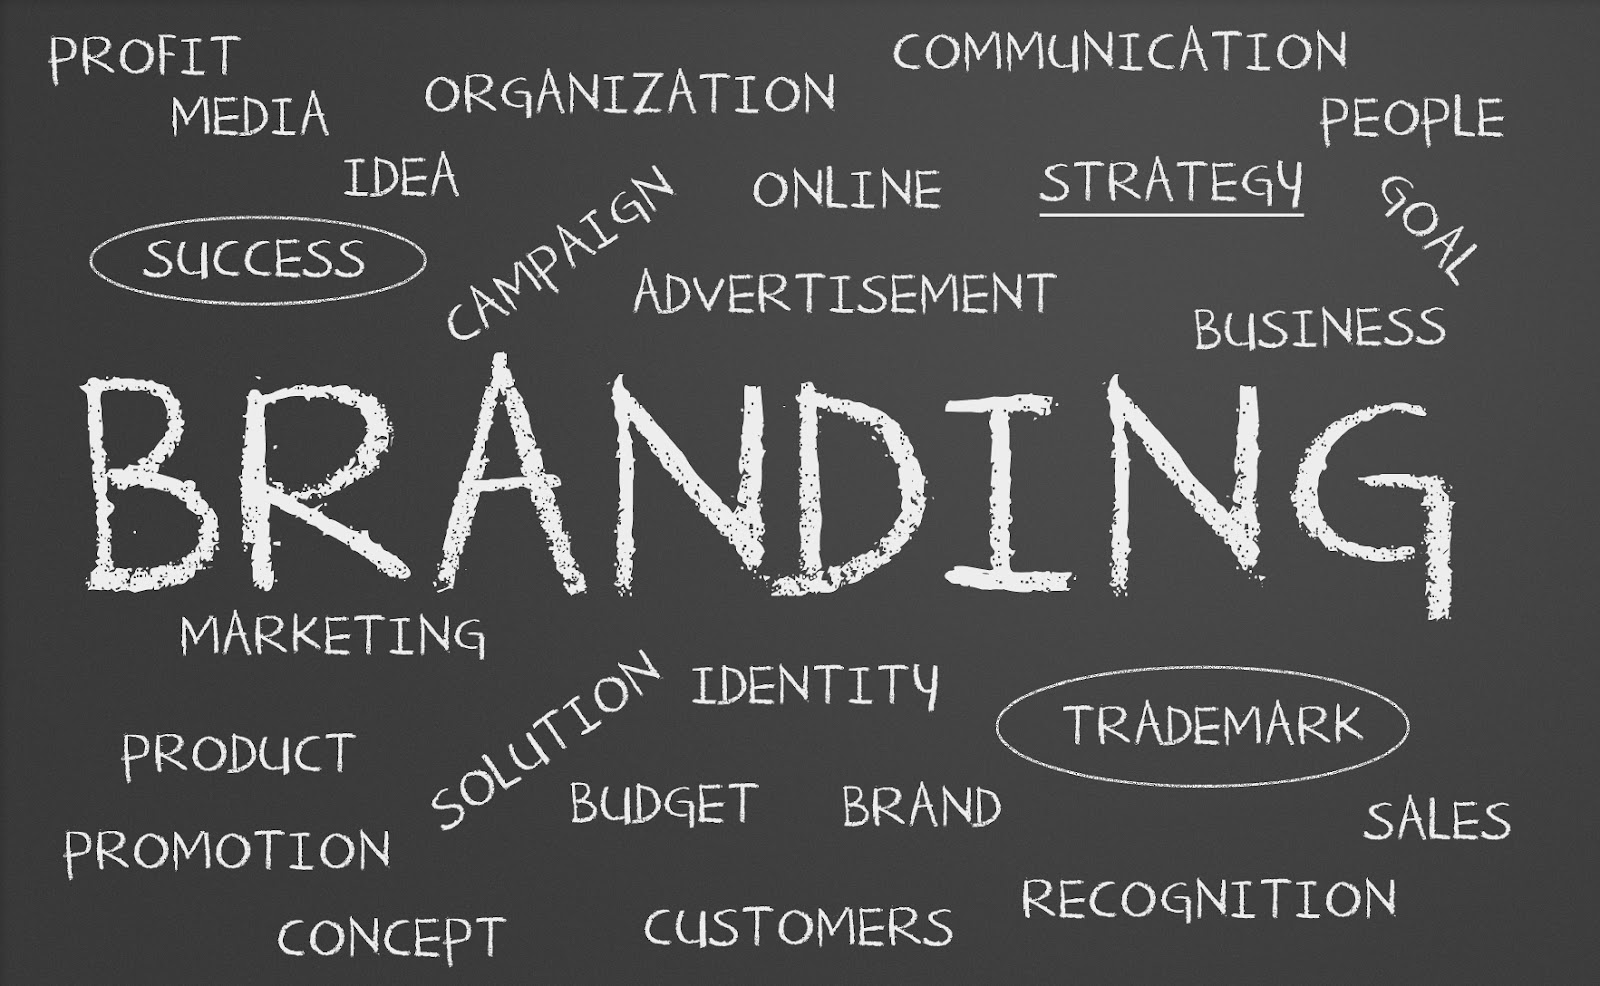 Many aspects of branding